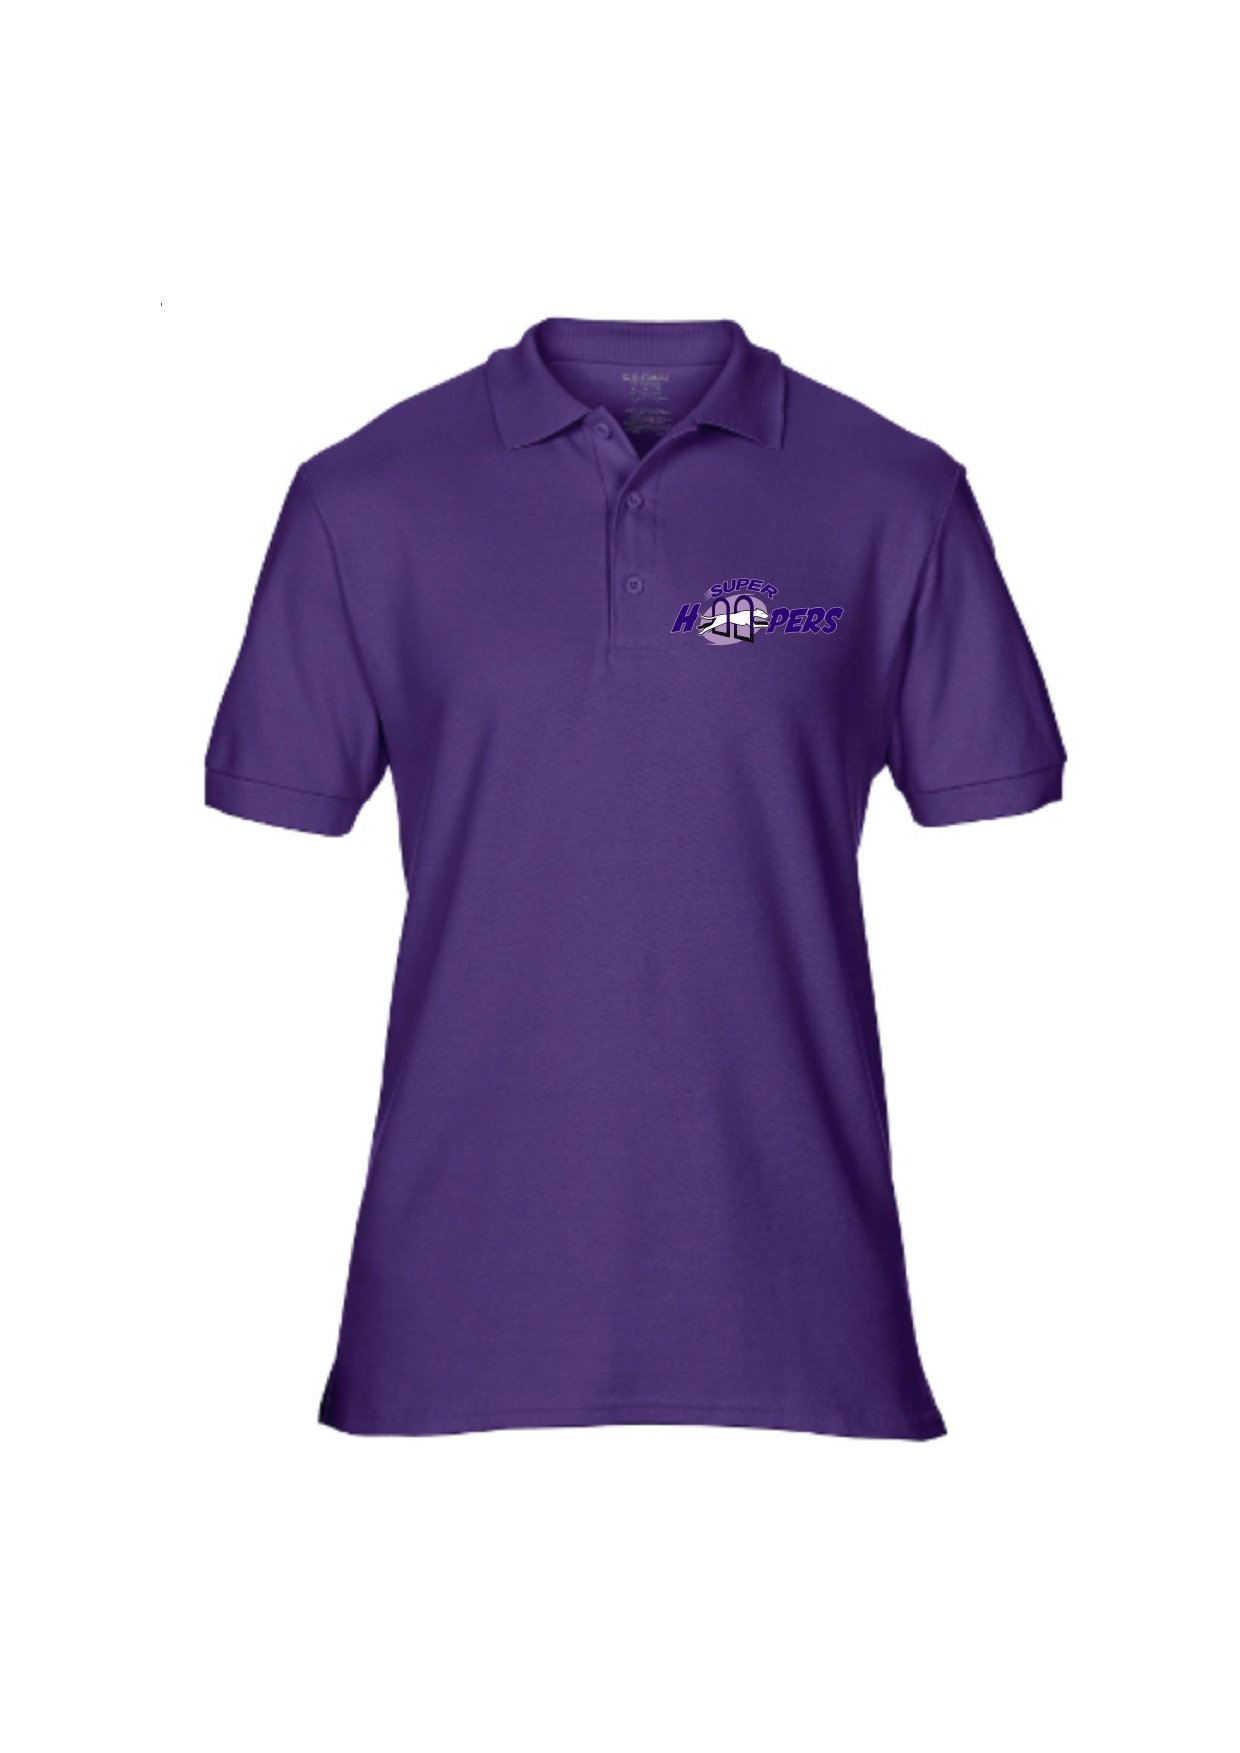 Super Hoopers Polo shirt 4XL – Purple – Pooch